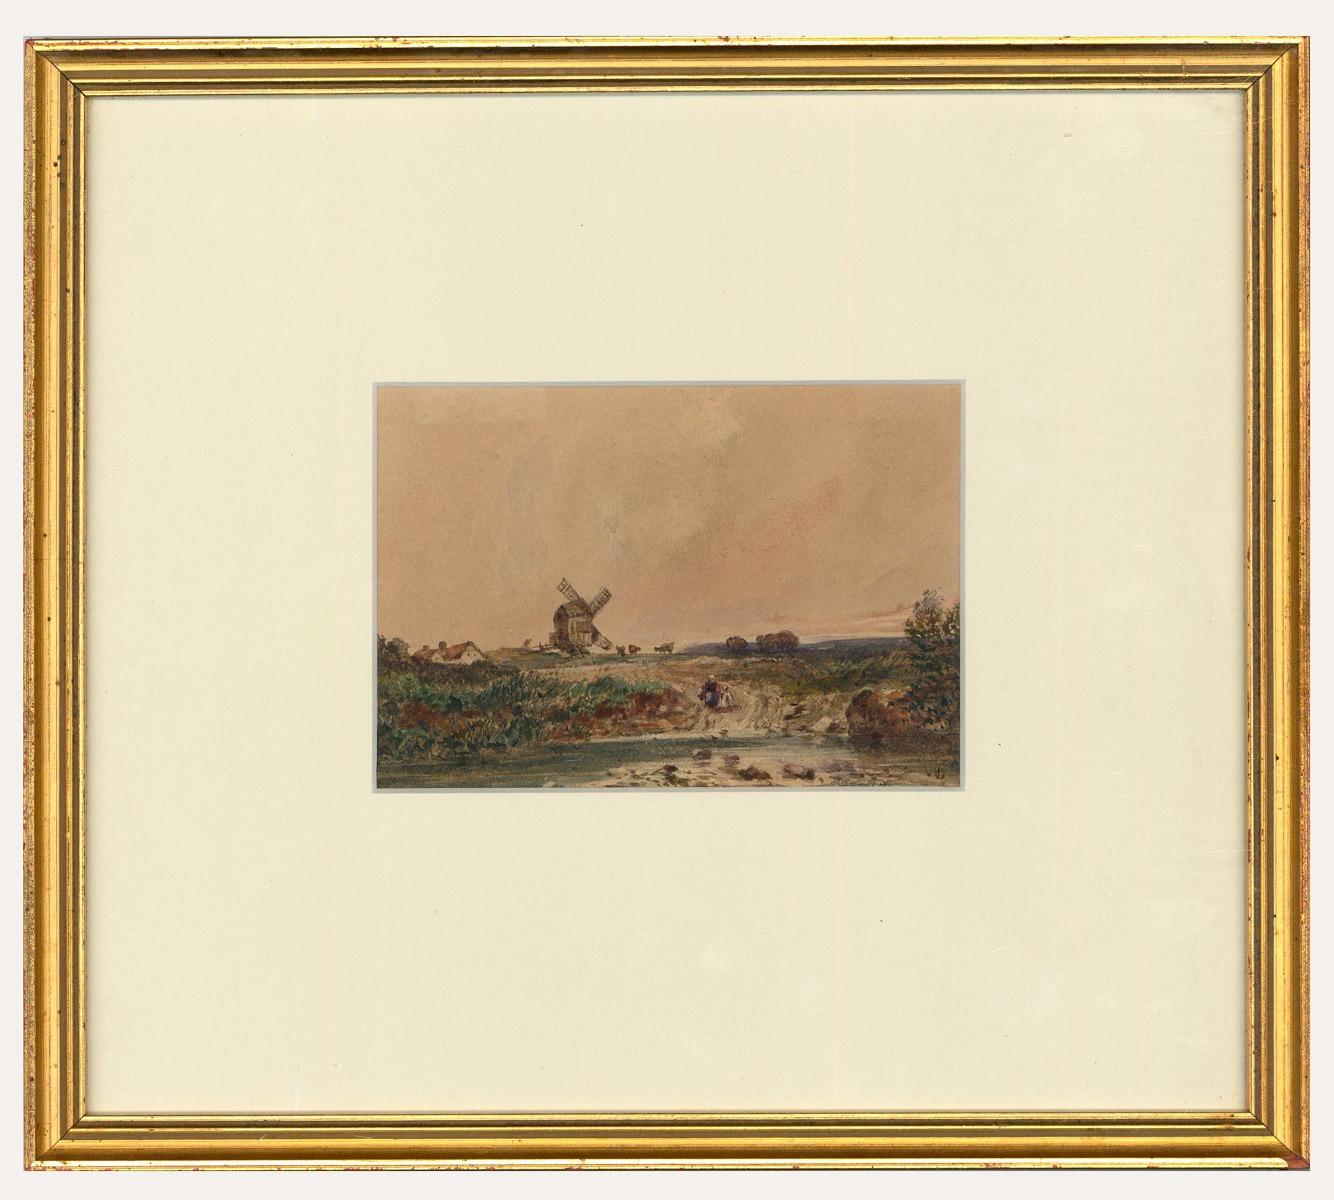 Charles Grant Davidson RWS Landscape Art - Charles G. Davidson RWS (1820-1902) - Framed Watercolour, The Little Windmill